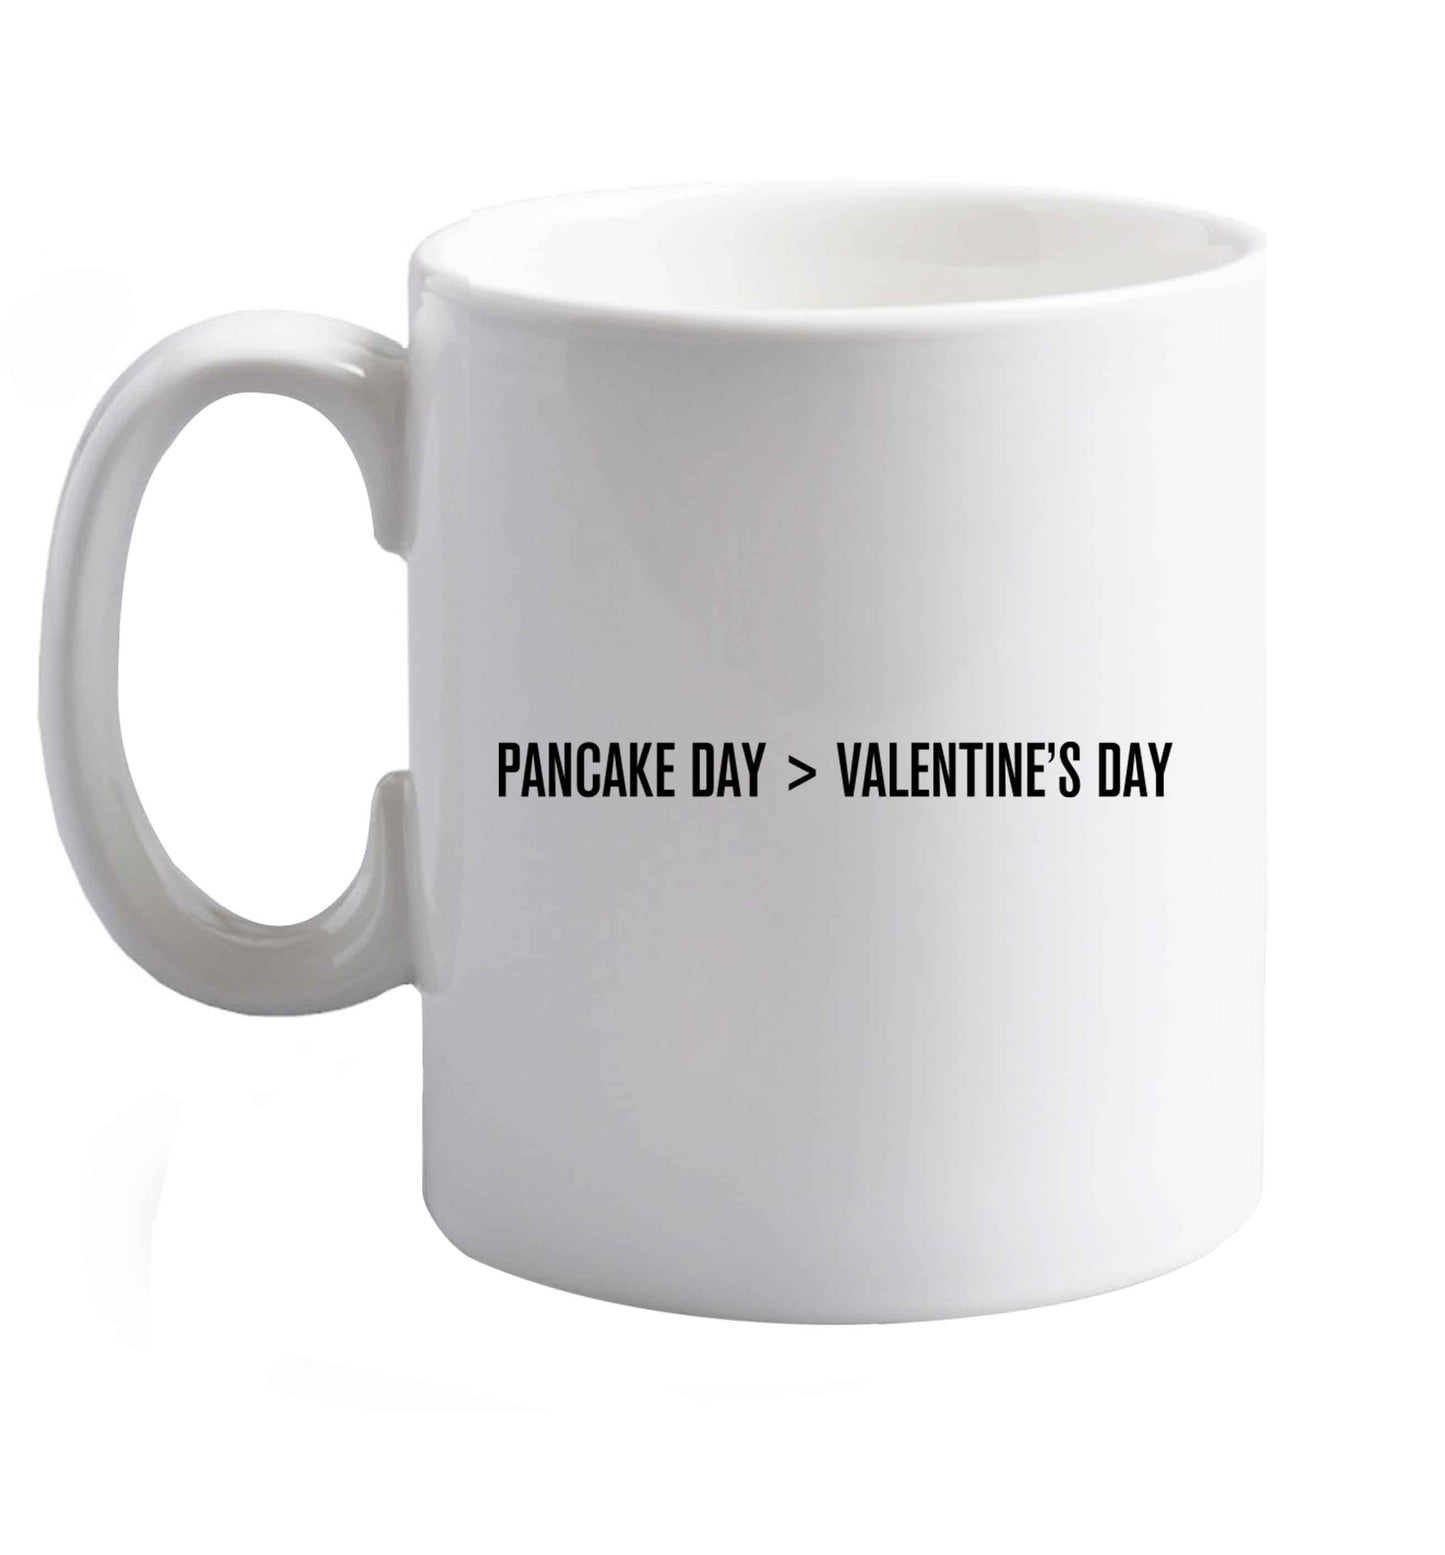 10 oz Pancake day > valentines day ceramic mug right handed